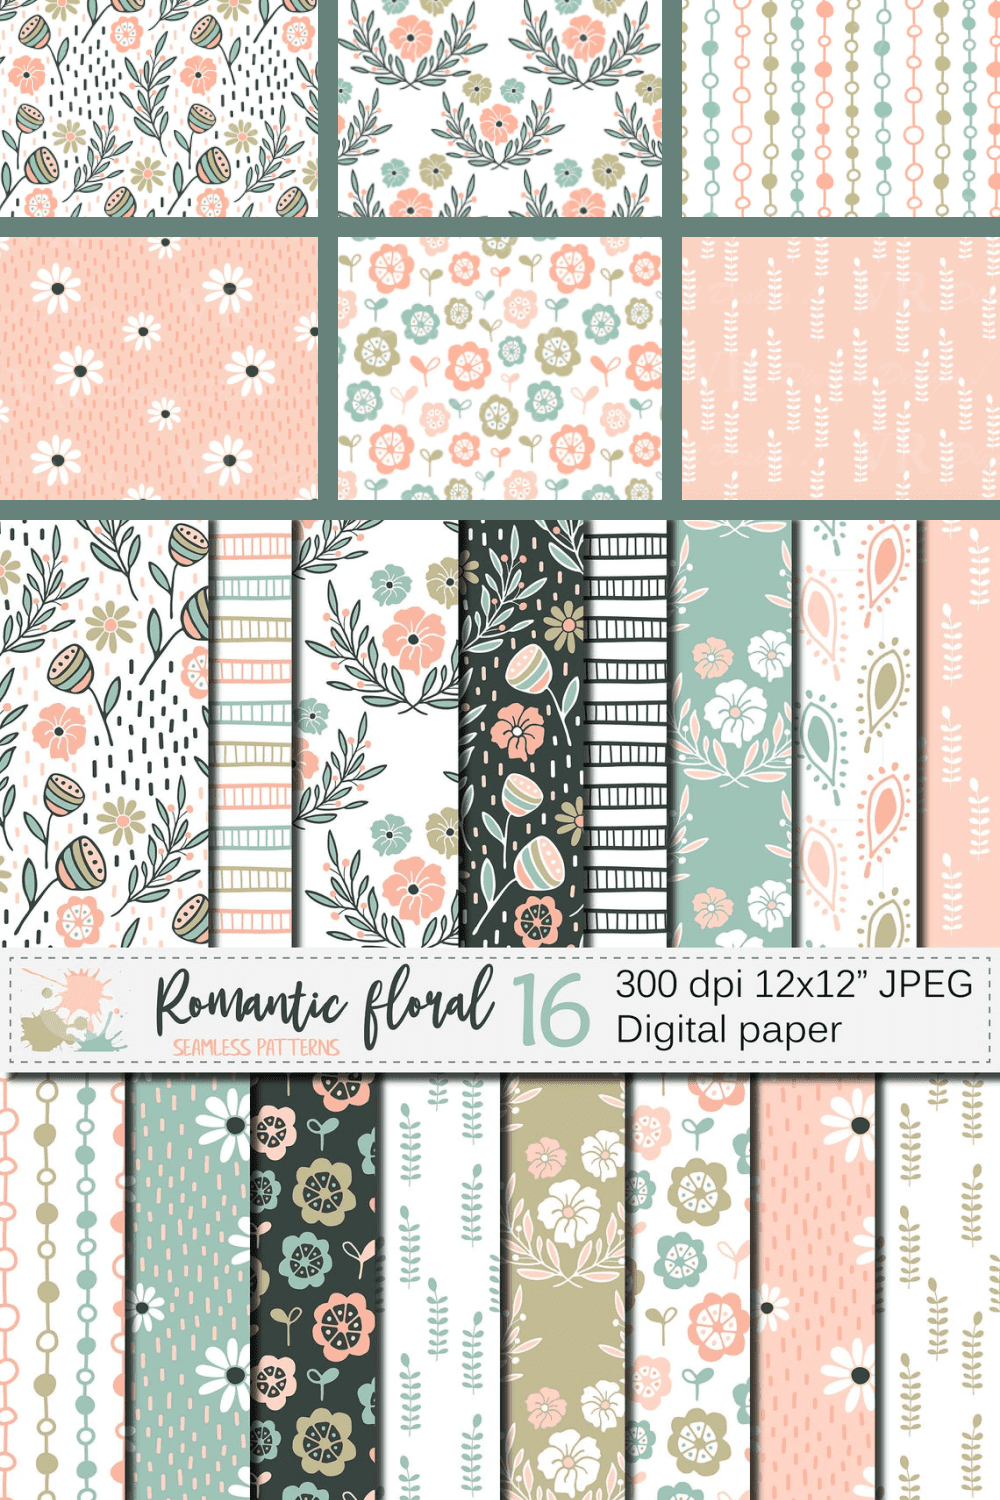 Romantic floral digital paper.